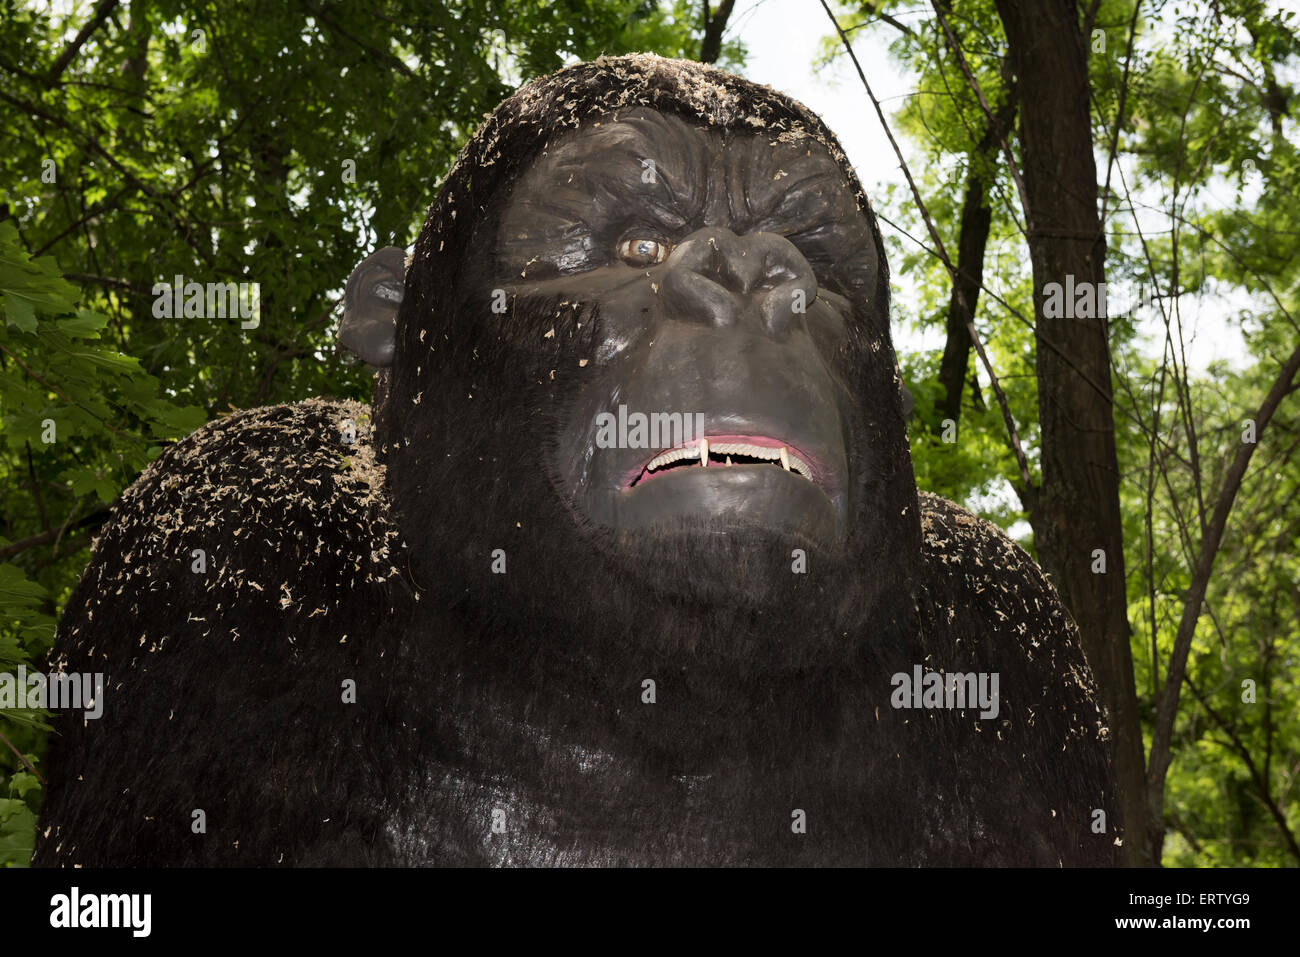 Gorilla WERE: Africa DIMENSION: Germ 1.65-1.75 meters, weight Stock Photo -  Alamy